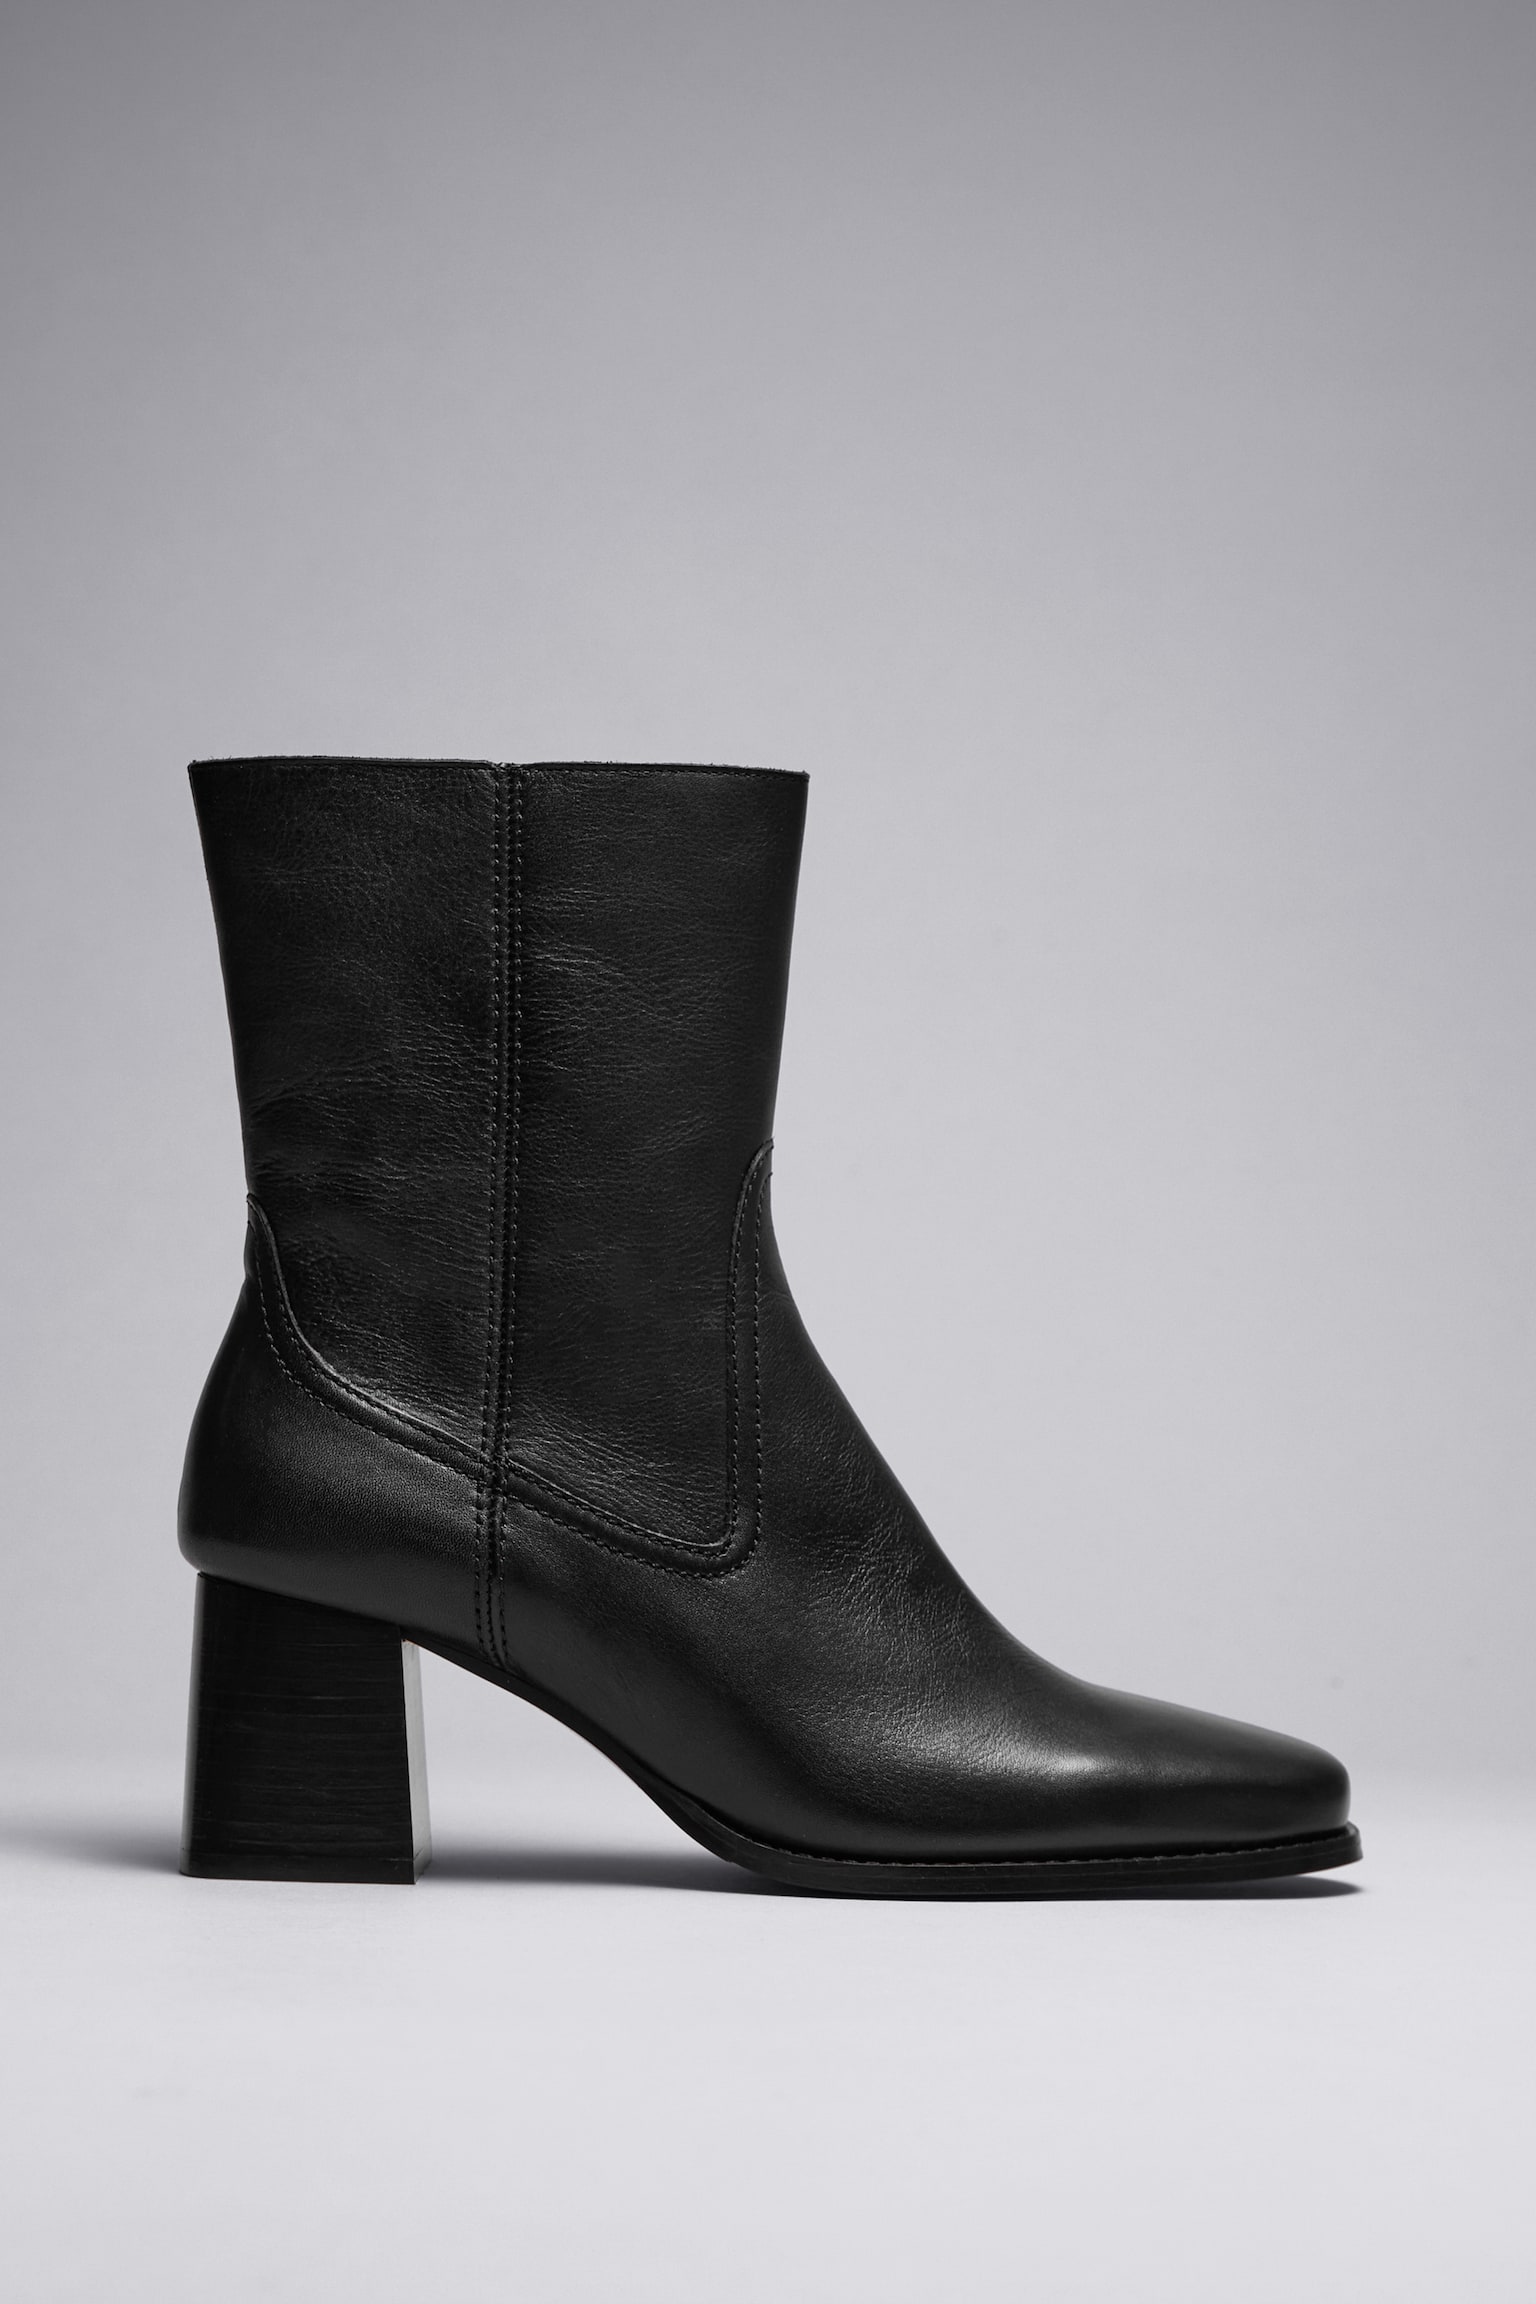 Støvler til | Ankel- og knæhøje støvler | H&M DK